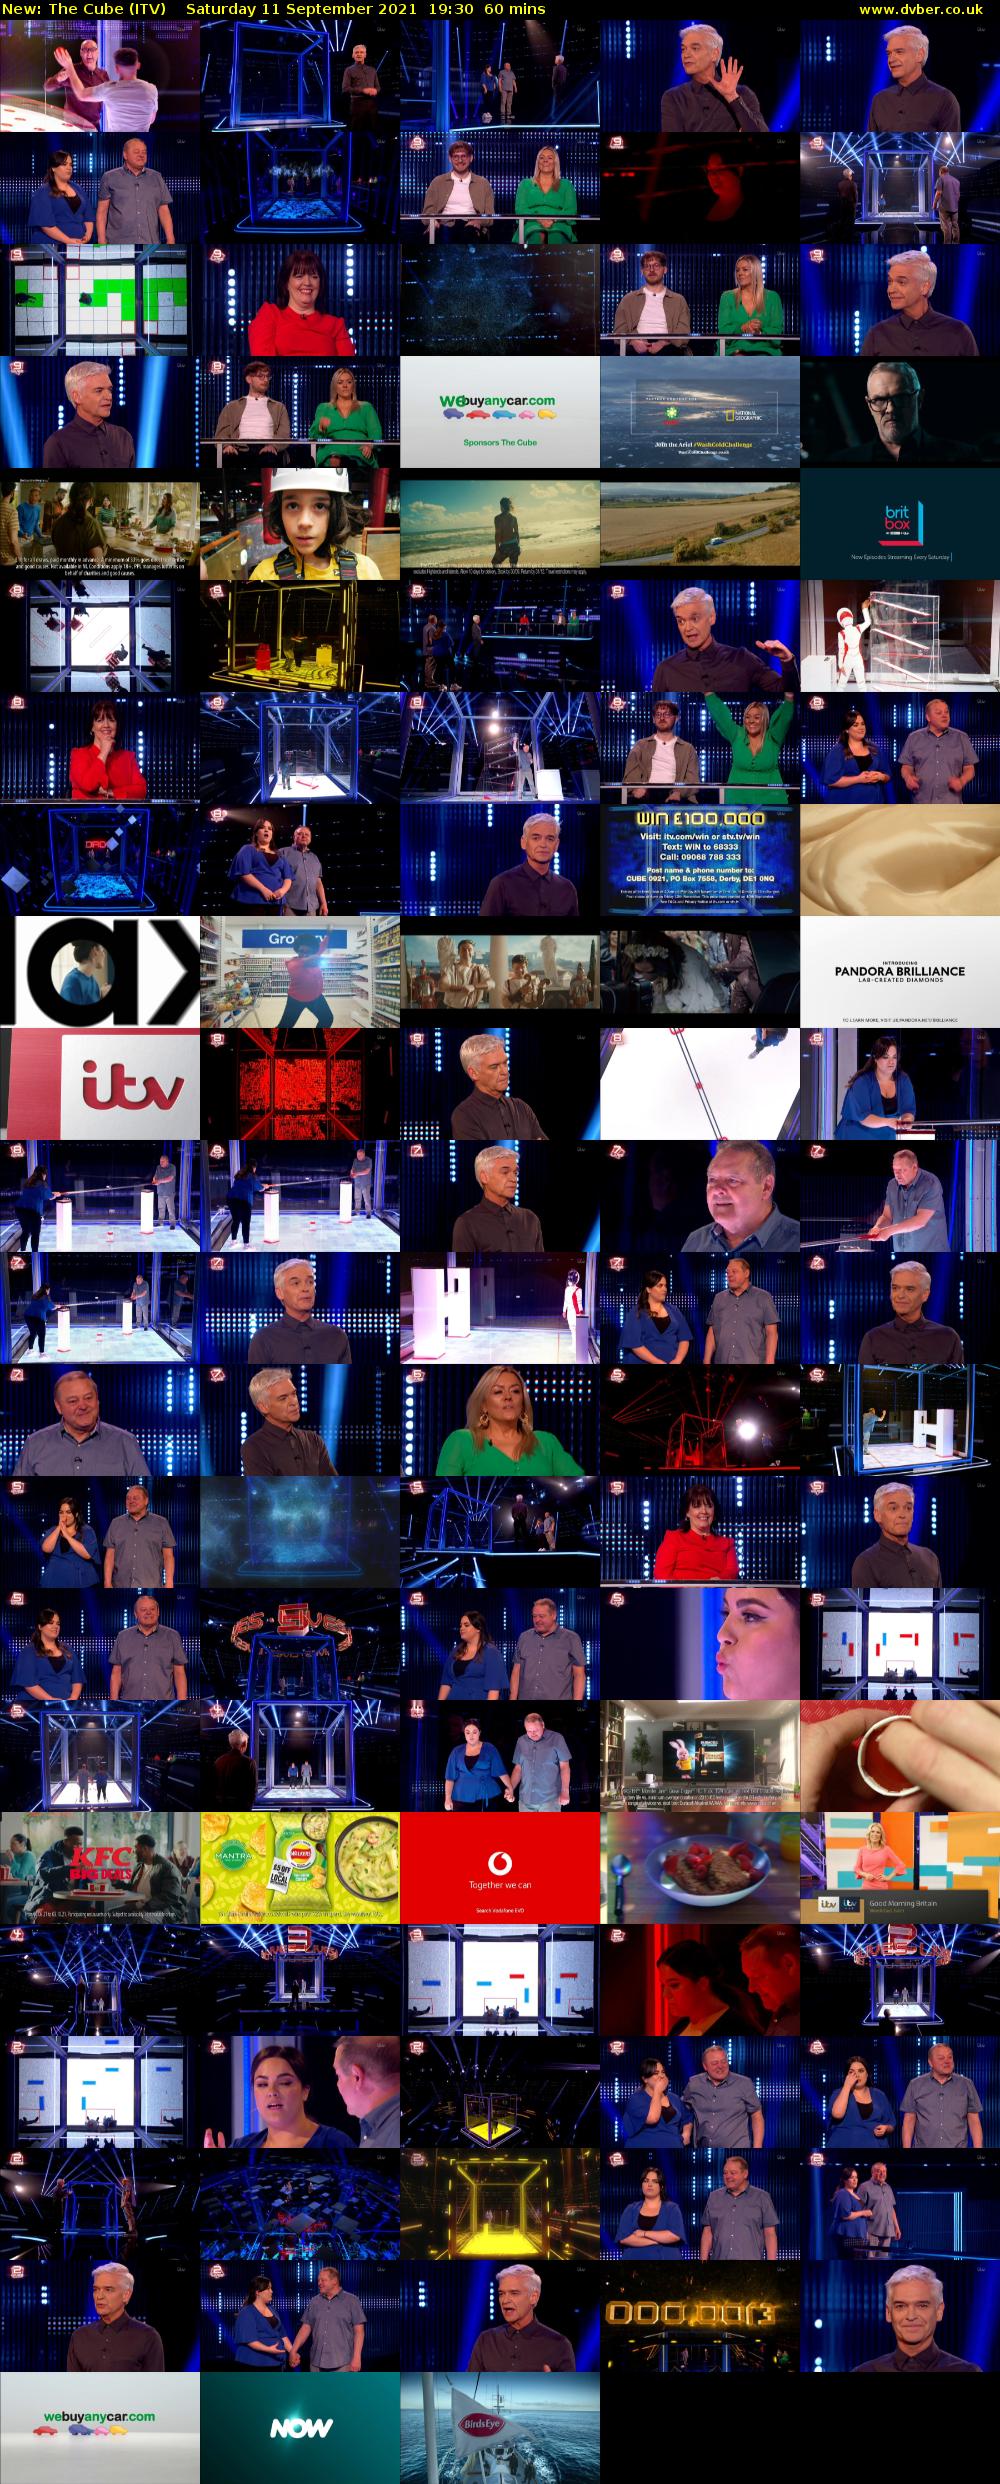 The Cube (ITV) Saturday 11 September 2021 19:30 - 20:30